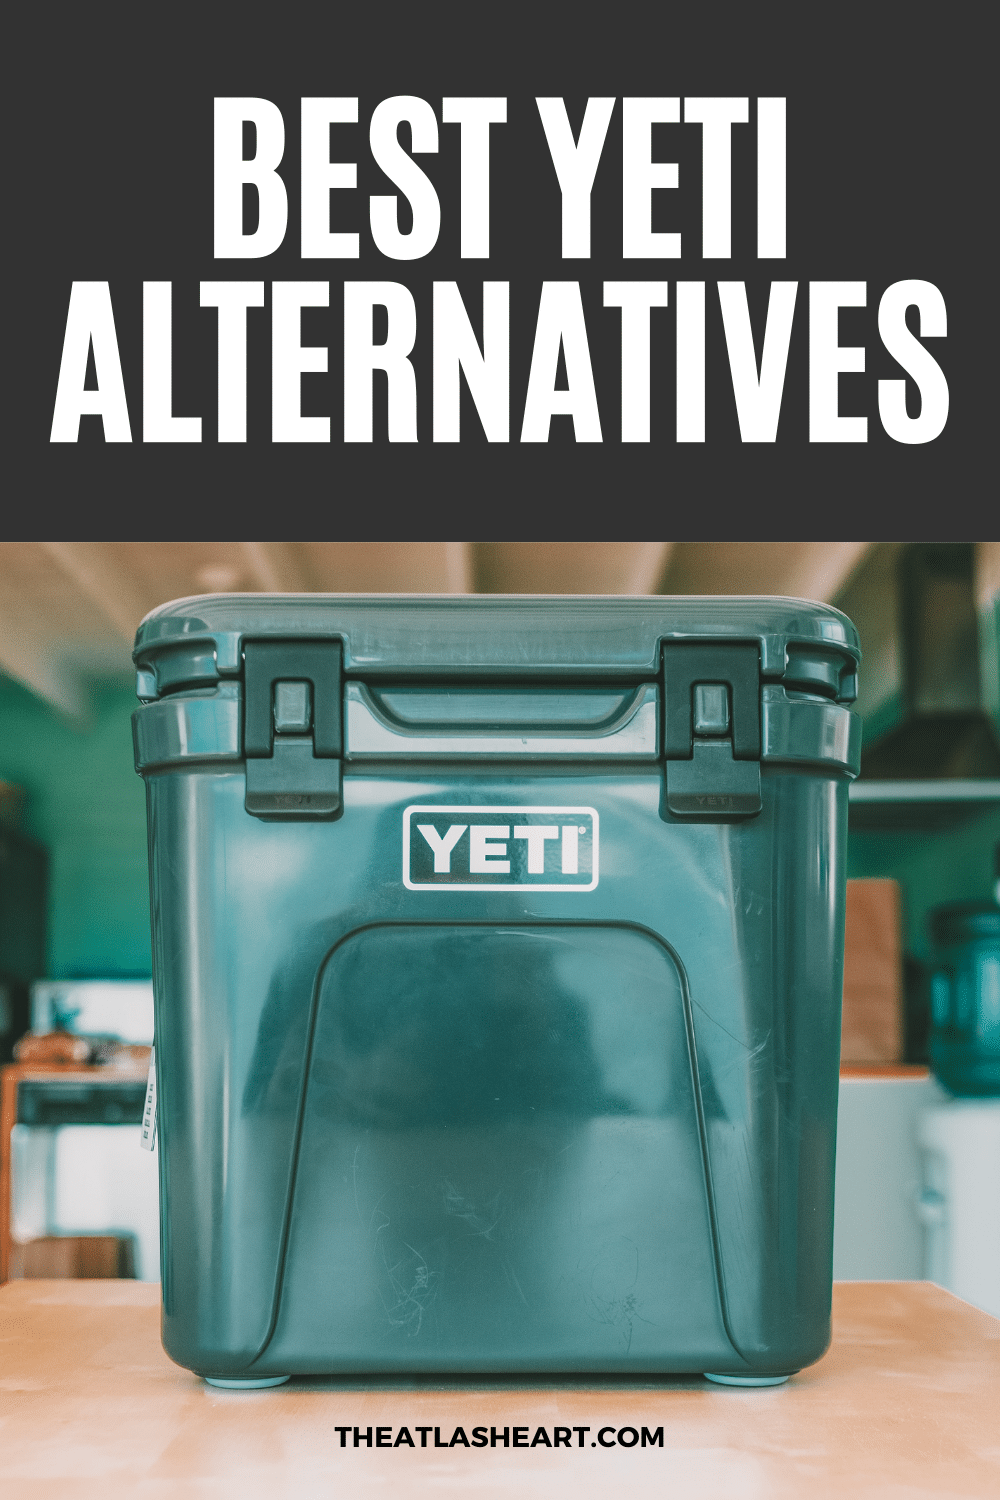 Best Yeti Alternatives: 12 Best Alternatives to Yeti Coolers in 2022